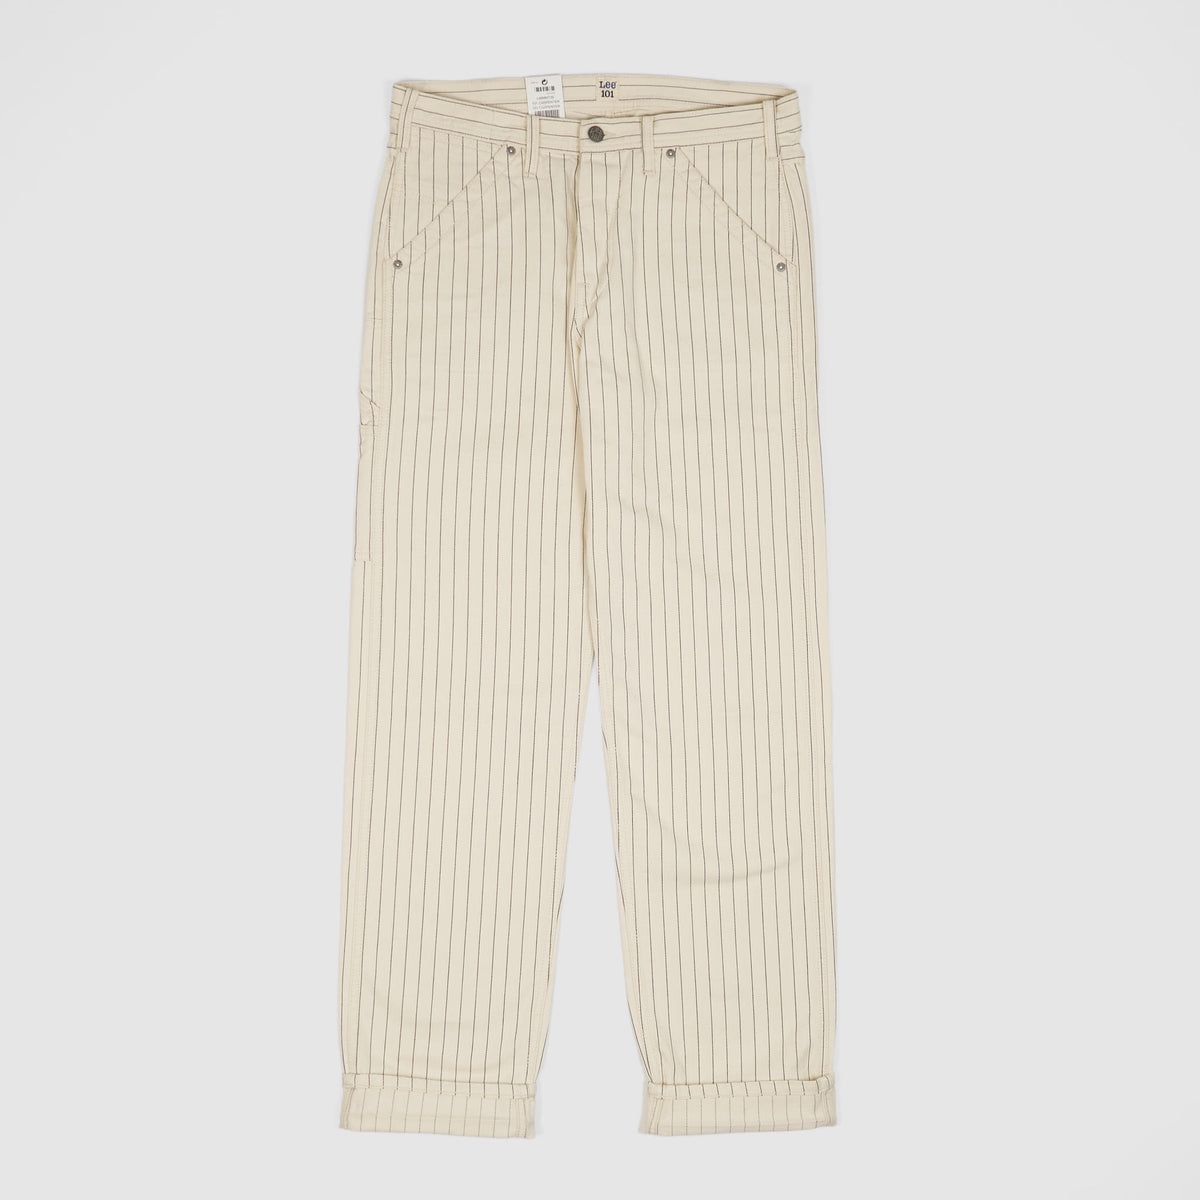 Lee 101 Carpenter Pants Indigo Stripes